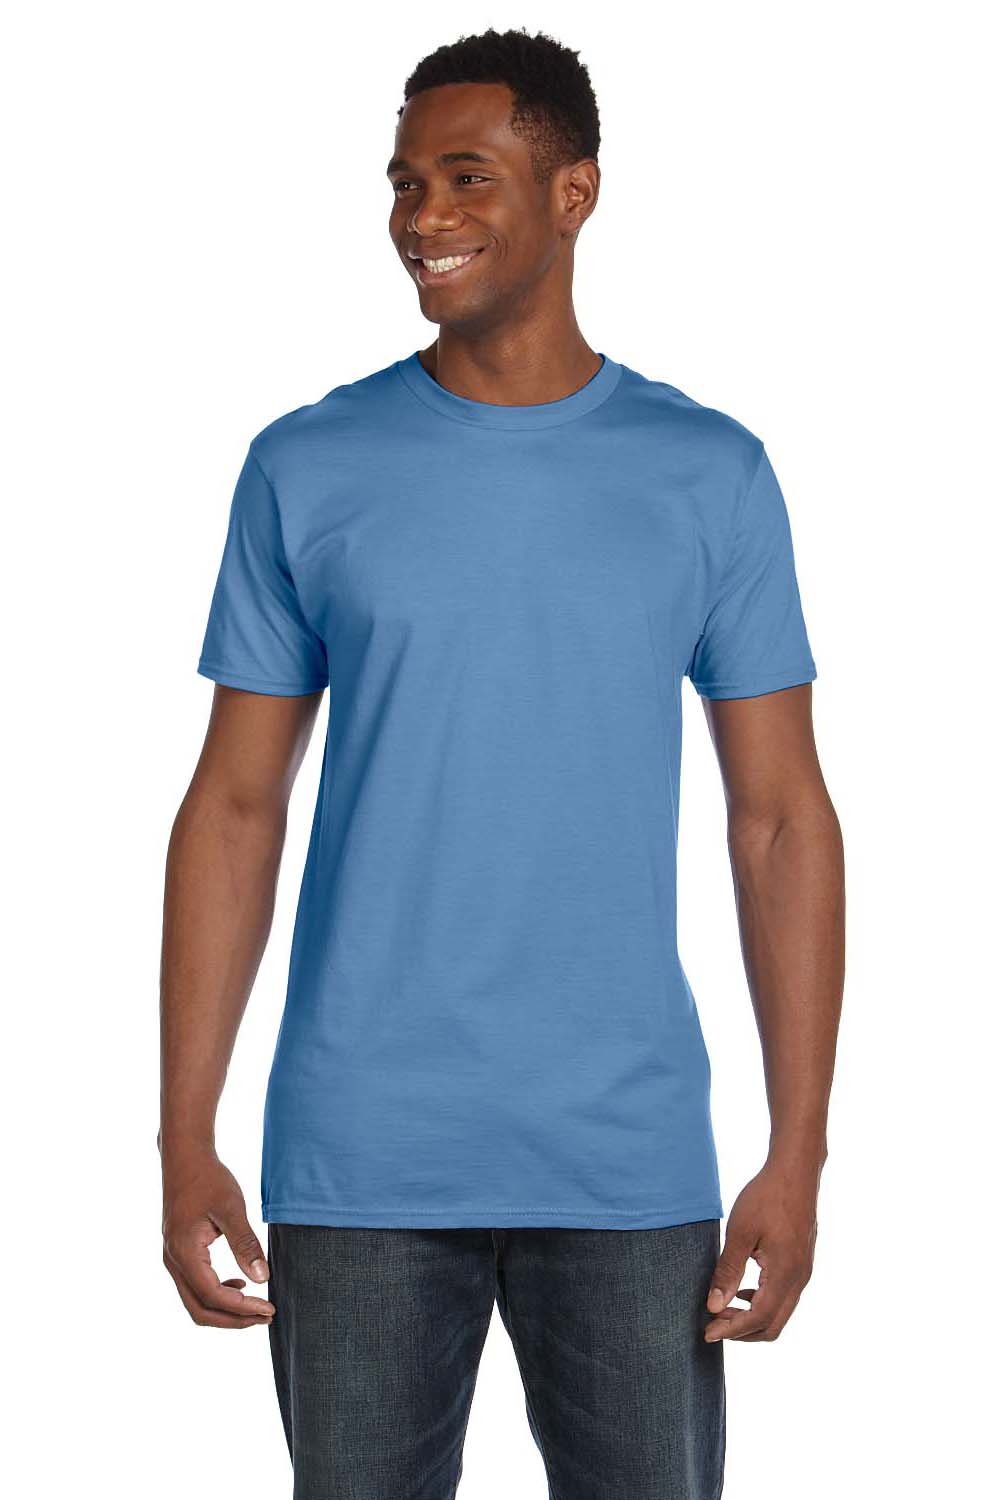 Hanes 4980 Mens Nano-T Short Sleeve Crewneck T-Shirt Carolina Blue Front